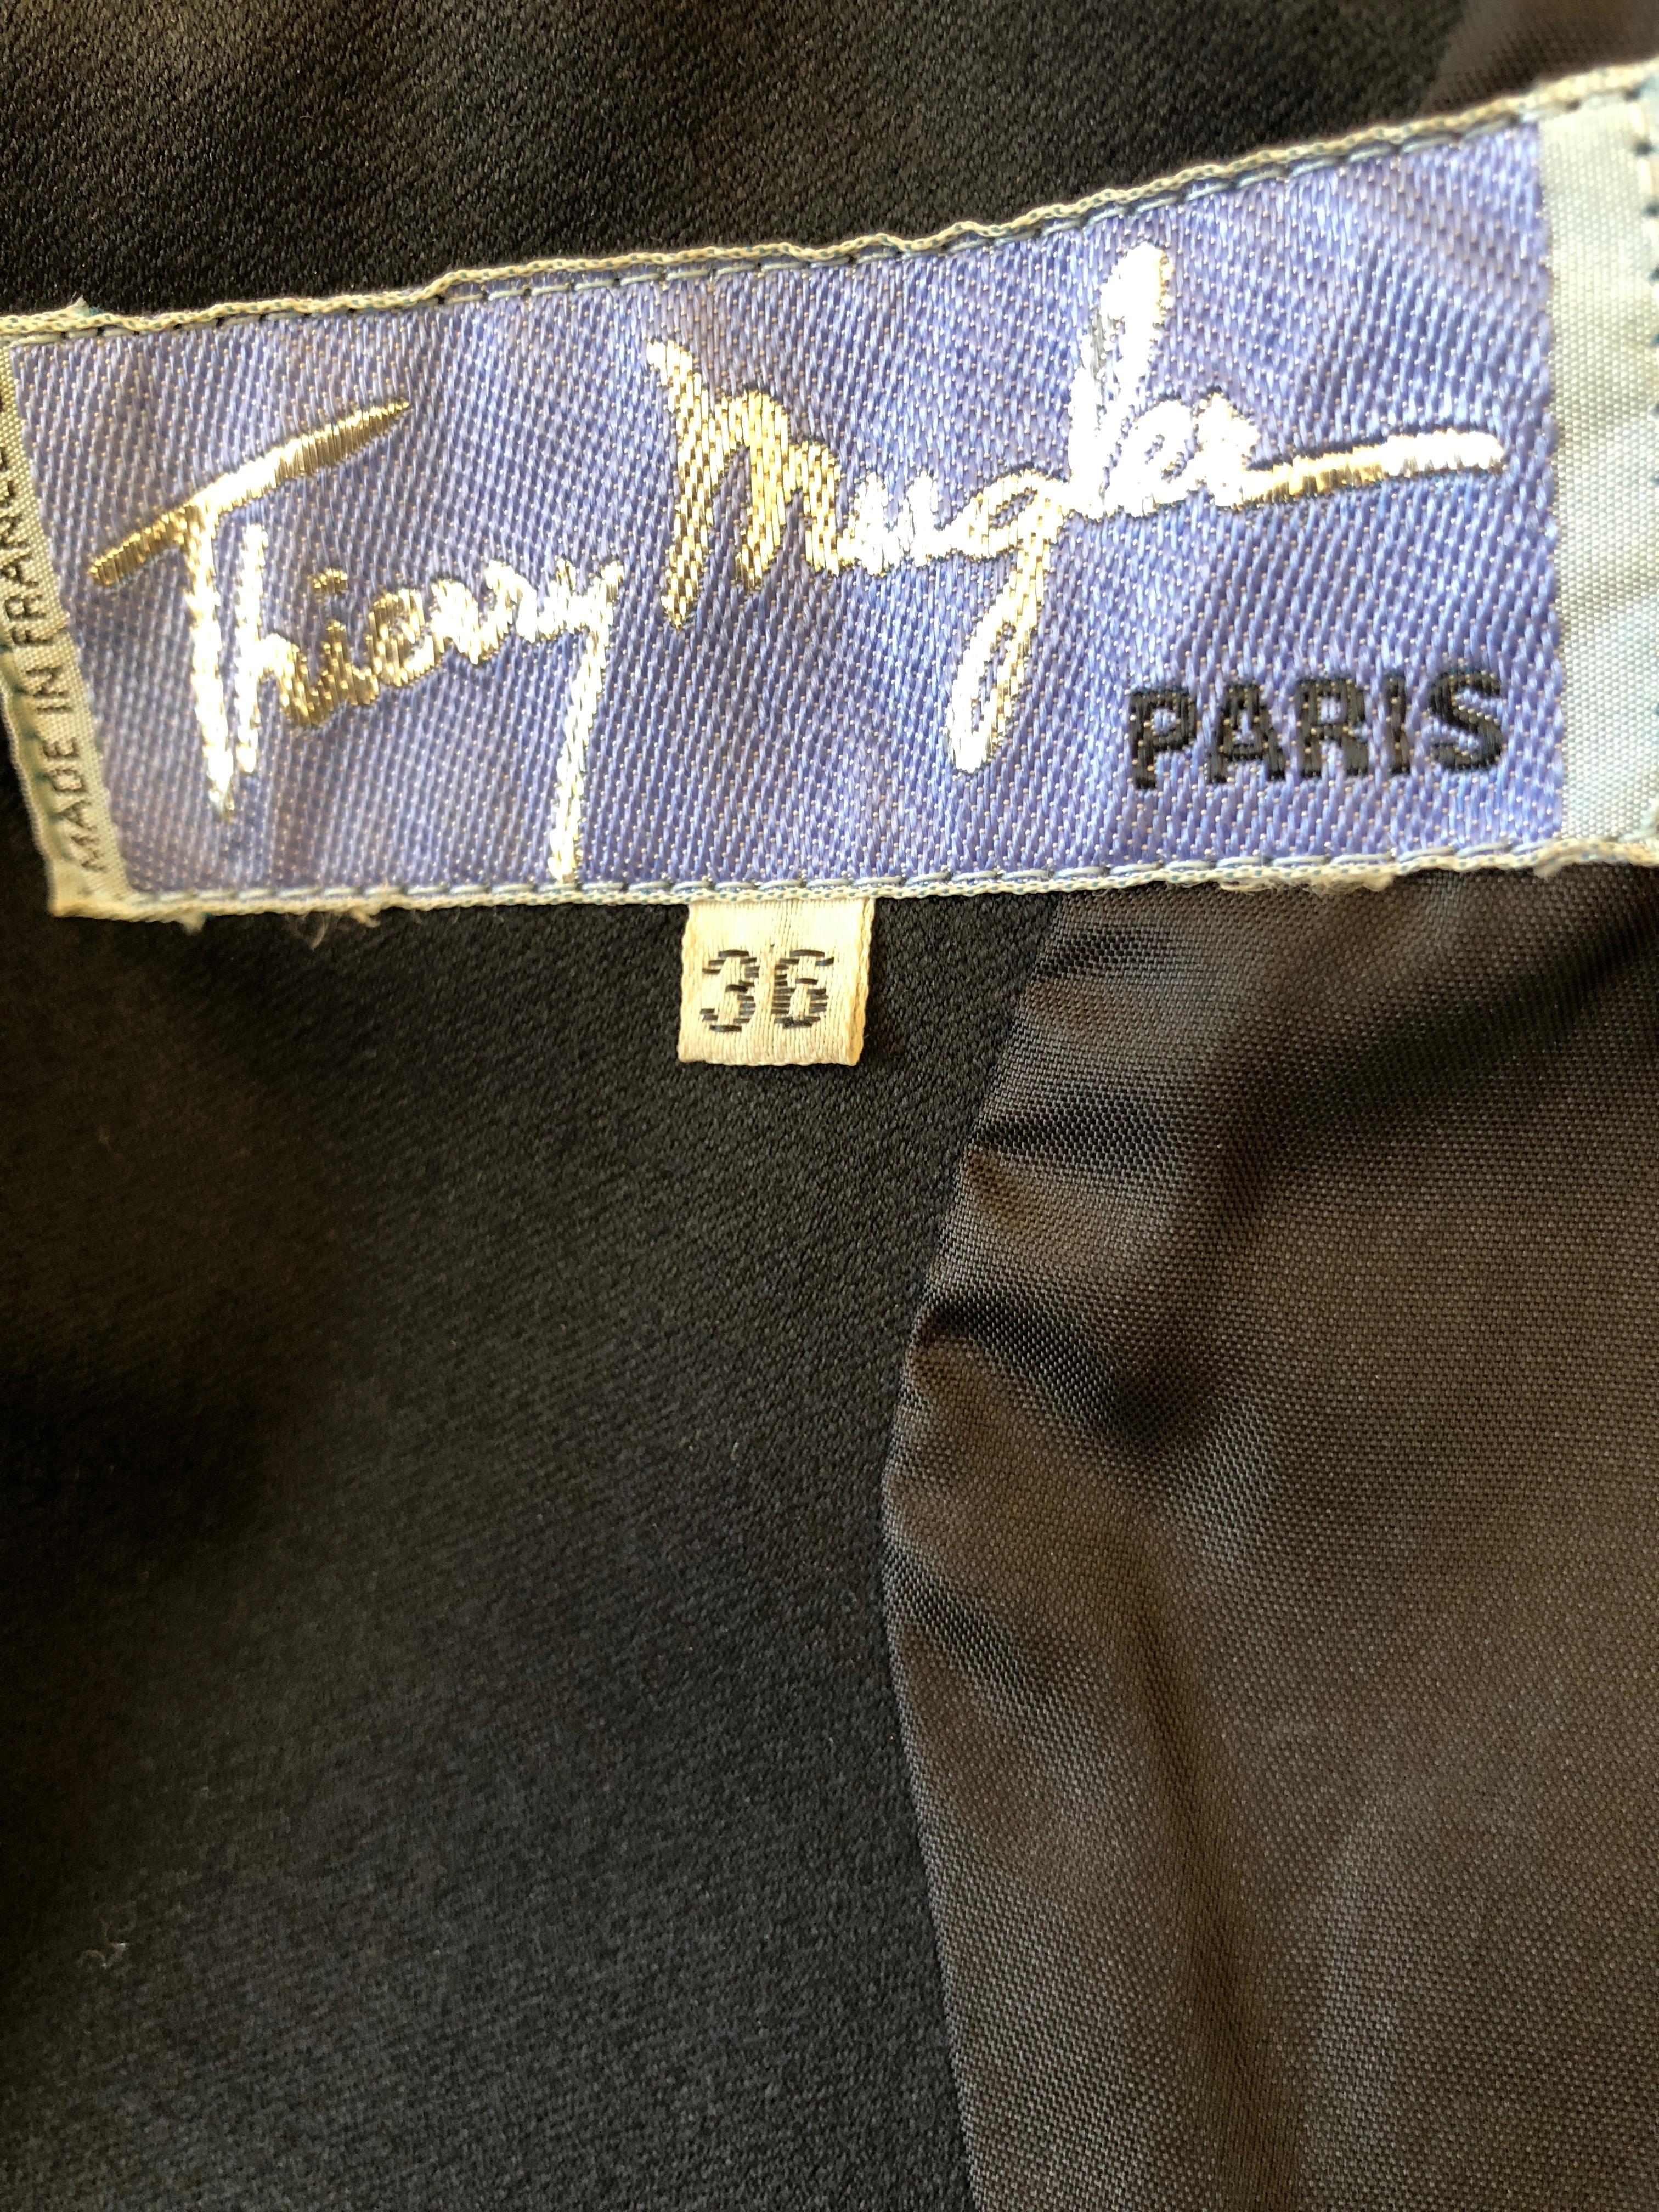 Thierry Mugler Vintage 1980's Black Evening Suit with Cut Out Velvet Details 36 For Sale 5